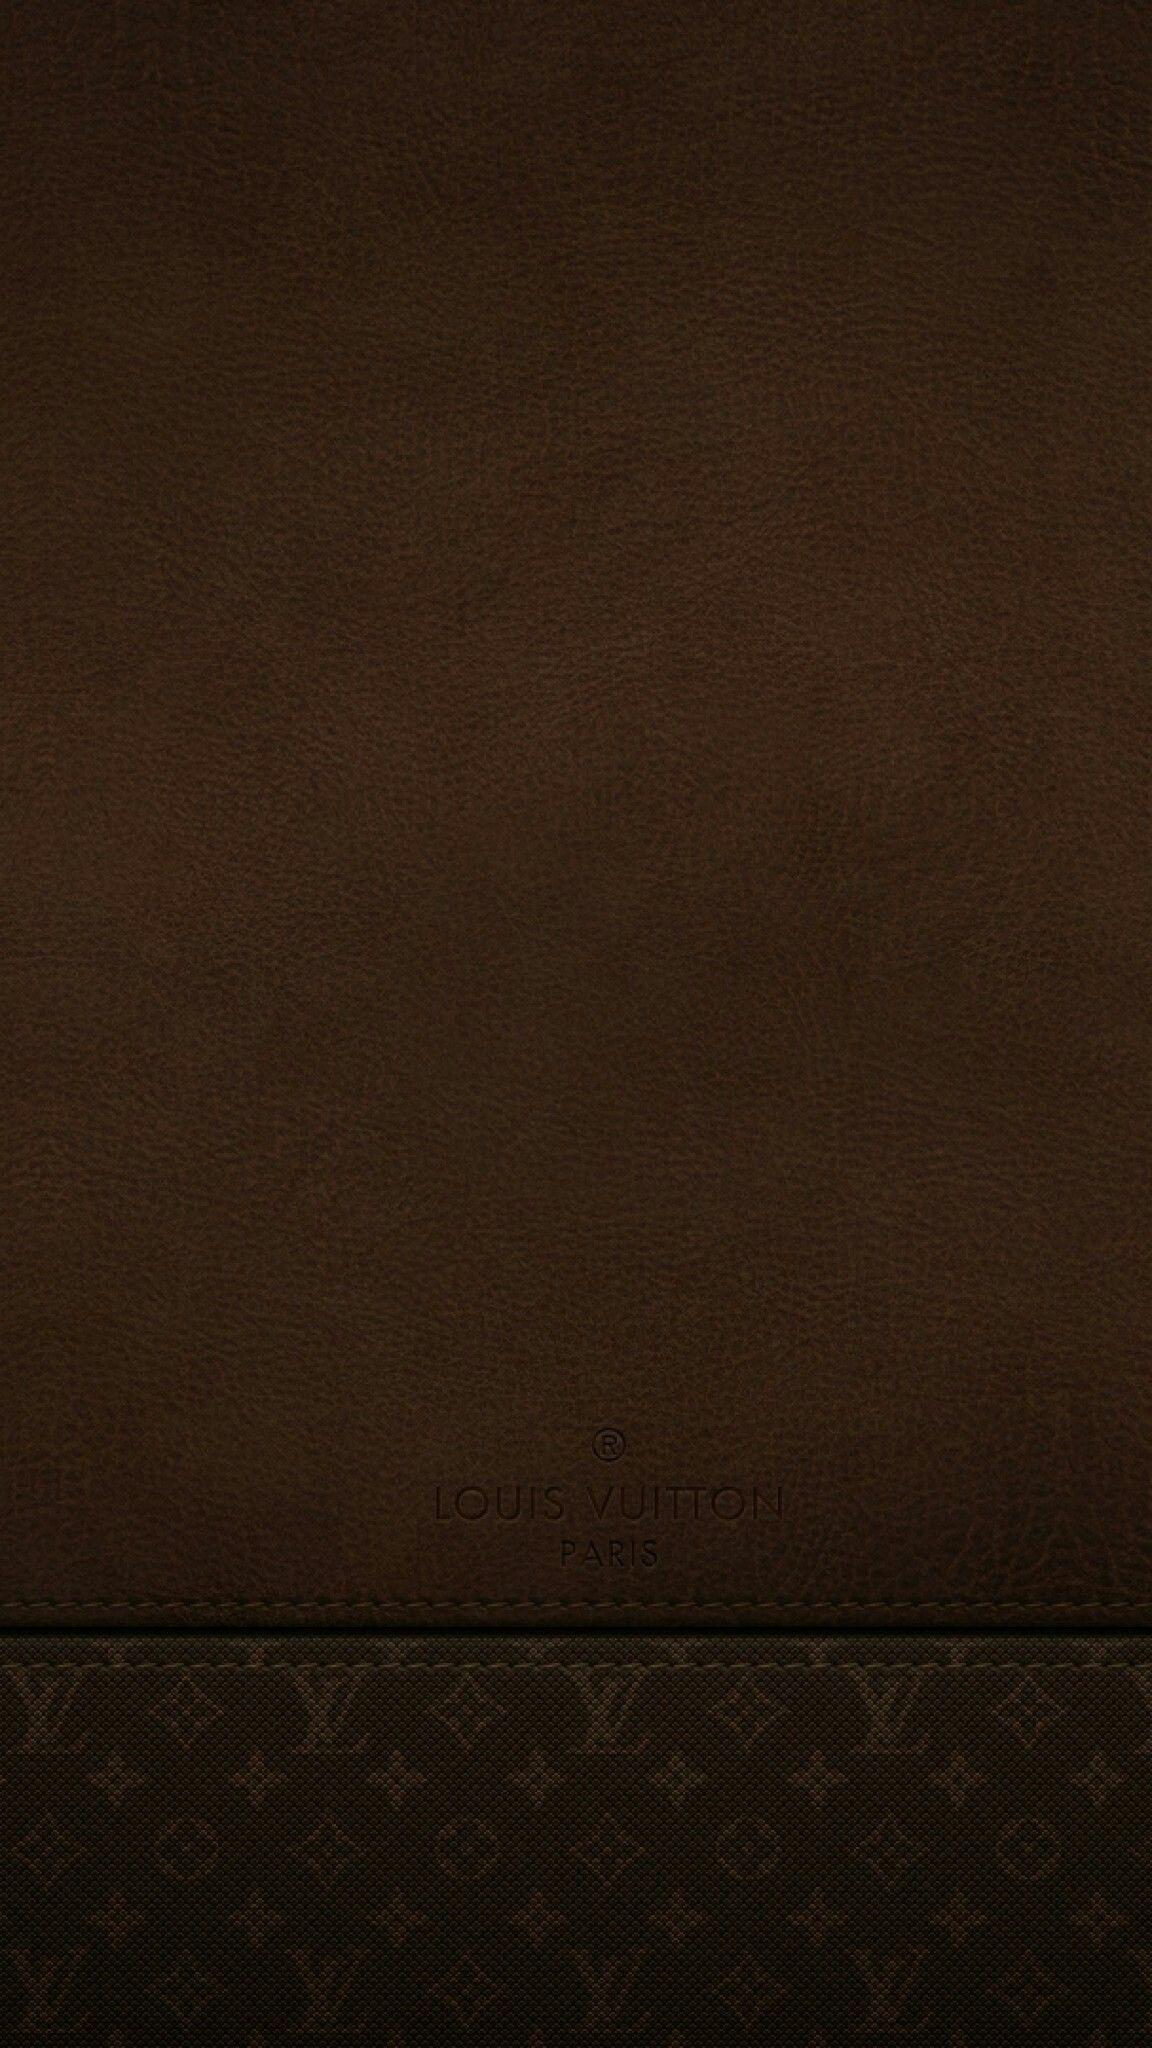 Black Leather iPhone Background